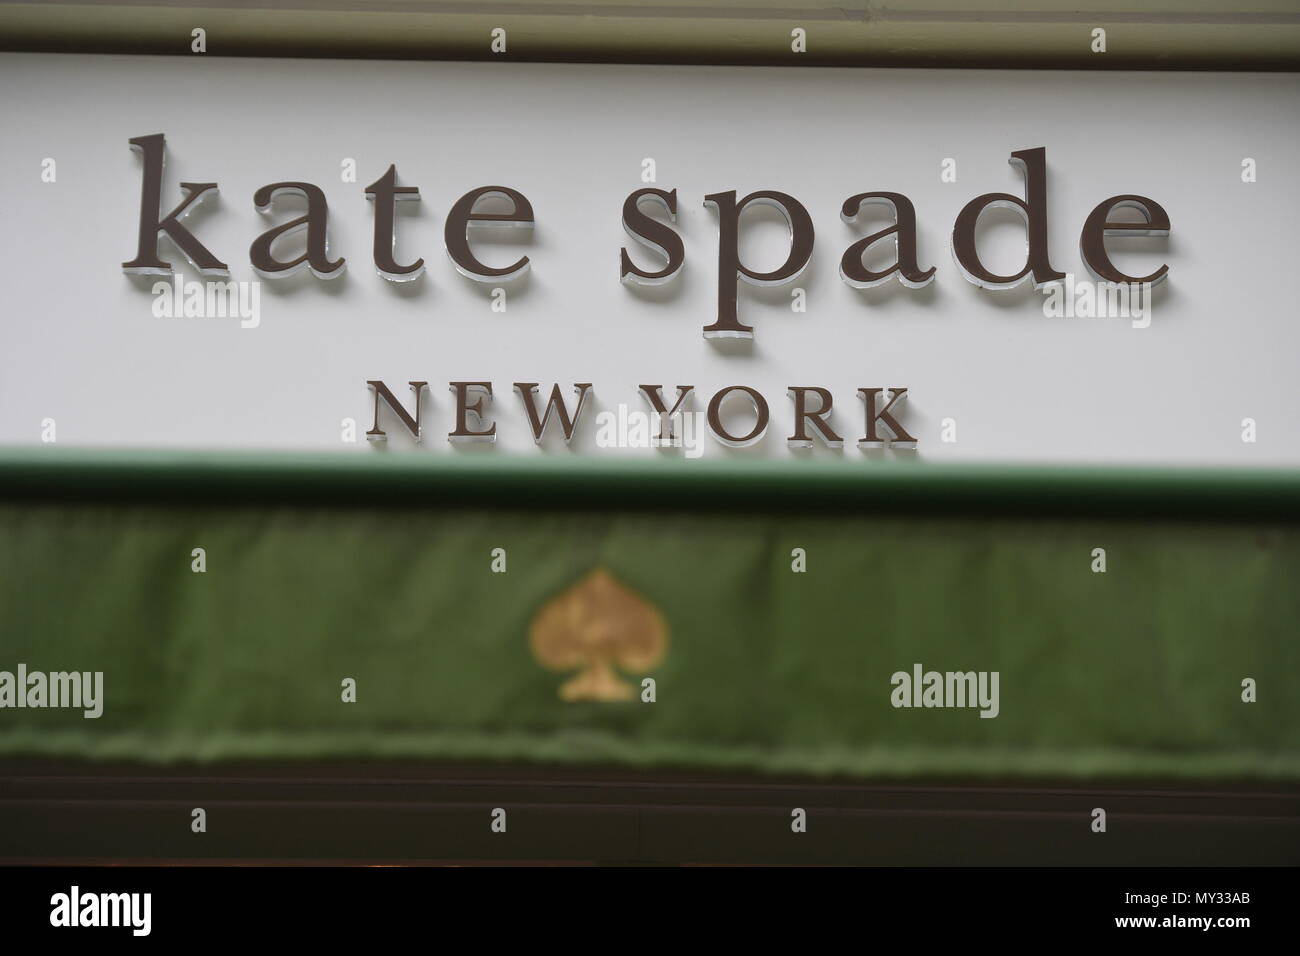 Fashion designer Kate Spade found dead in apartment